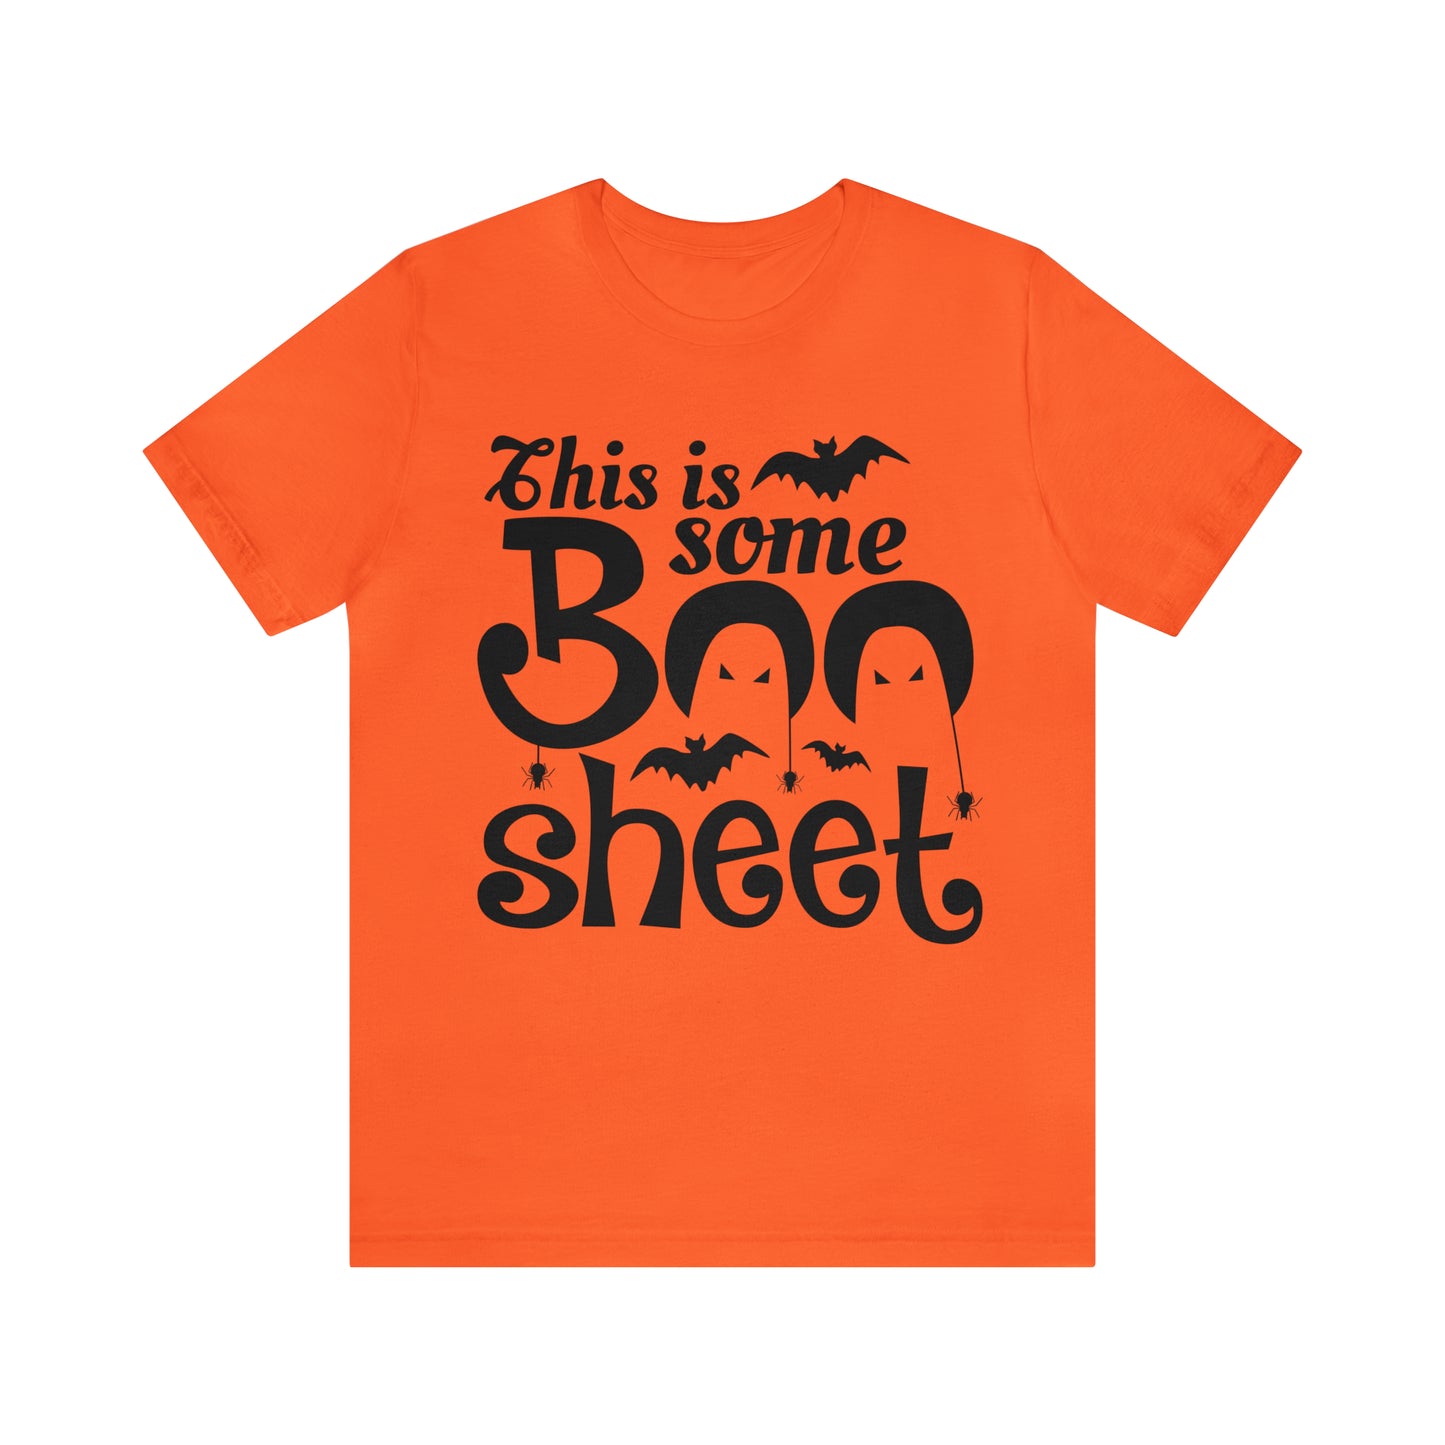 This Is Some Boo Sheet shirt, Boo Sheet Shirt, Spooky Season Tee, Retro Halloween Kids Shirt, Funny Halloween Ghost Shirt, T652